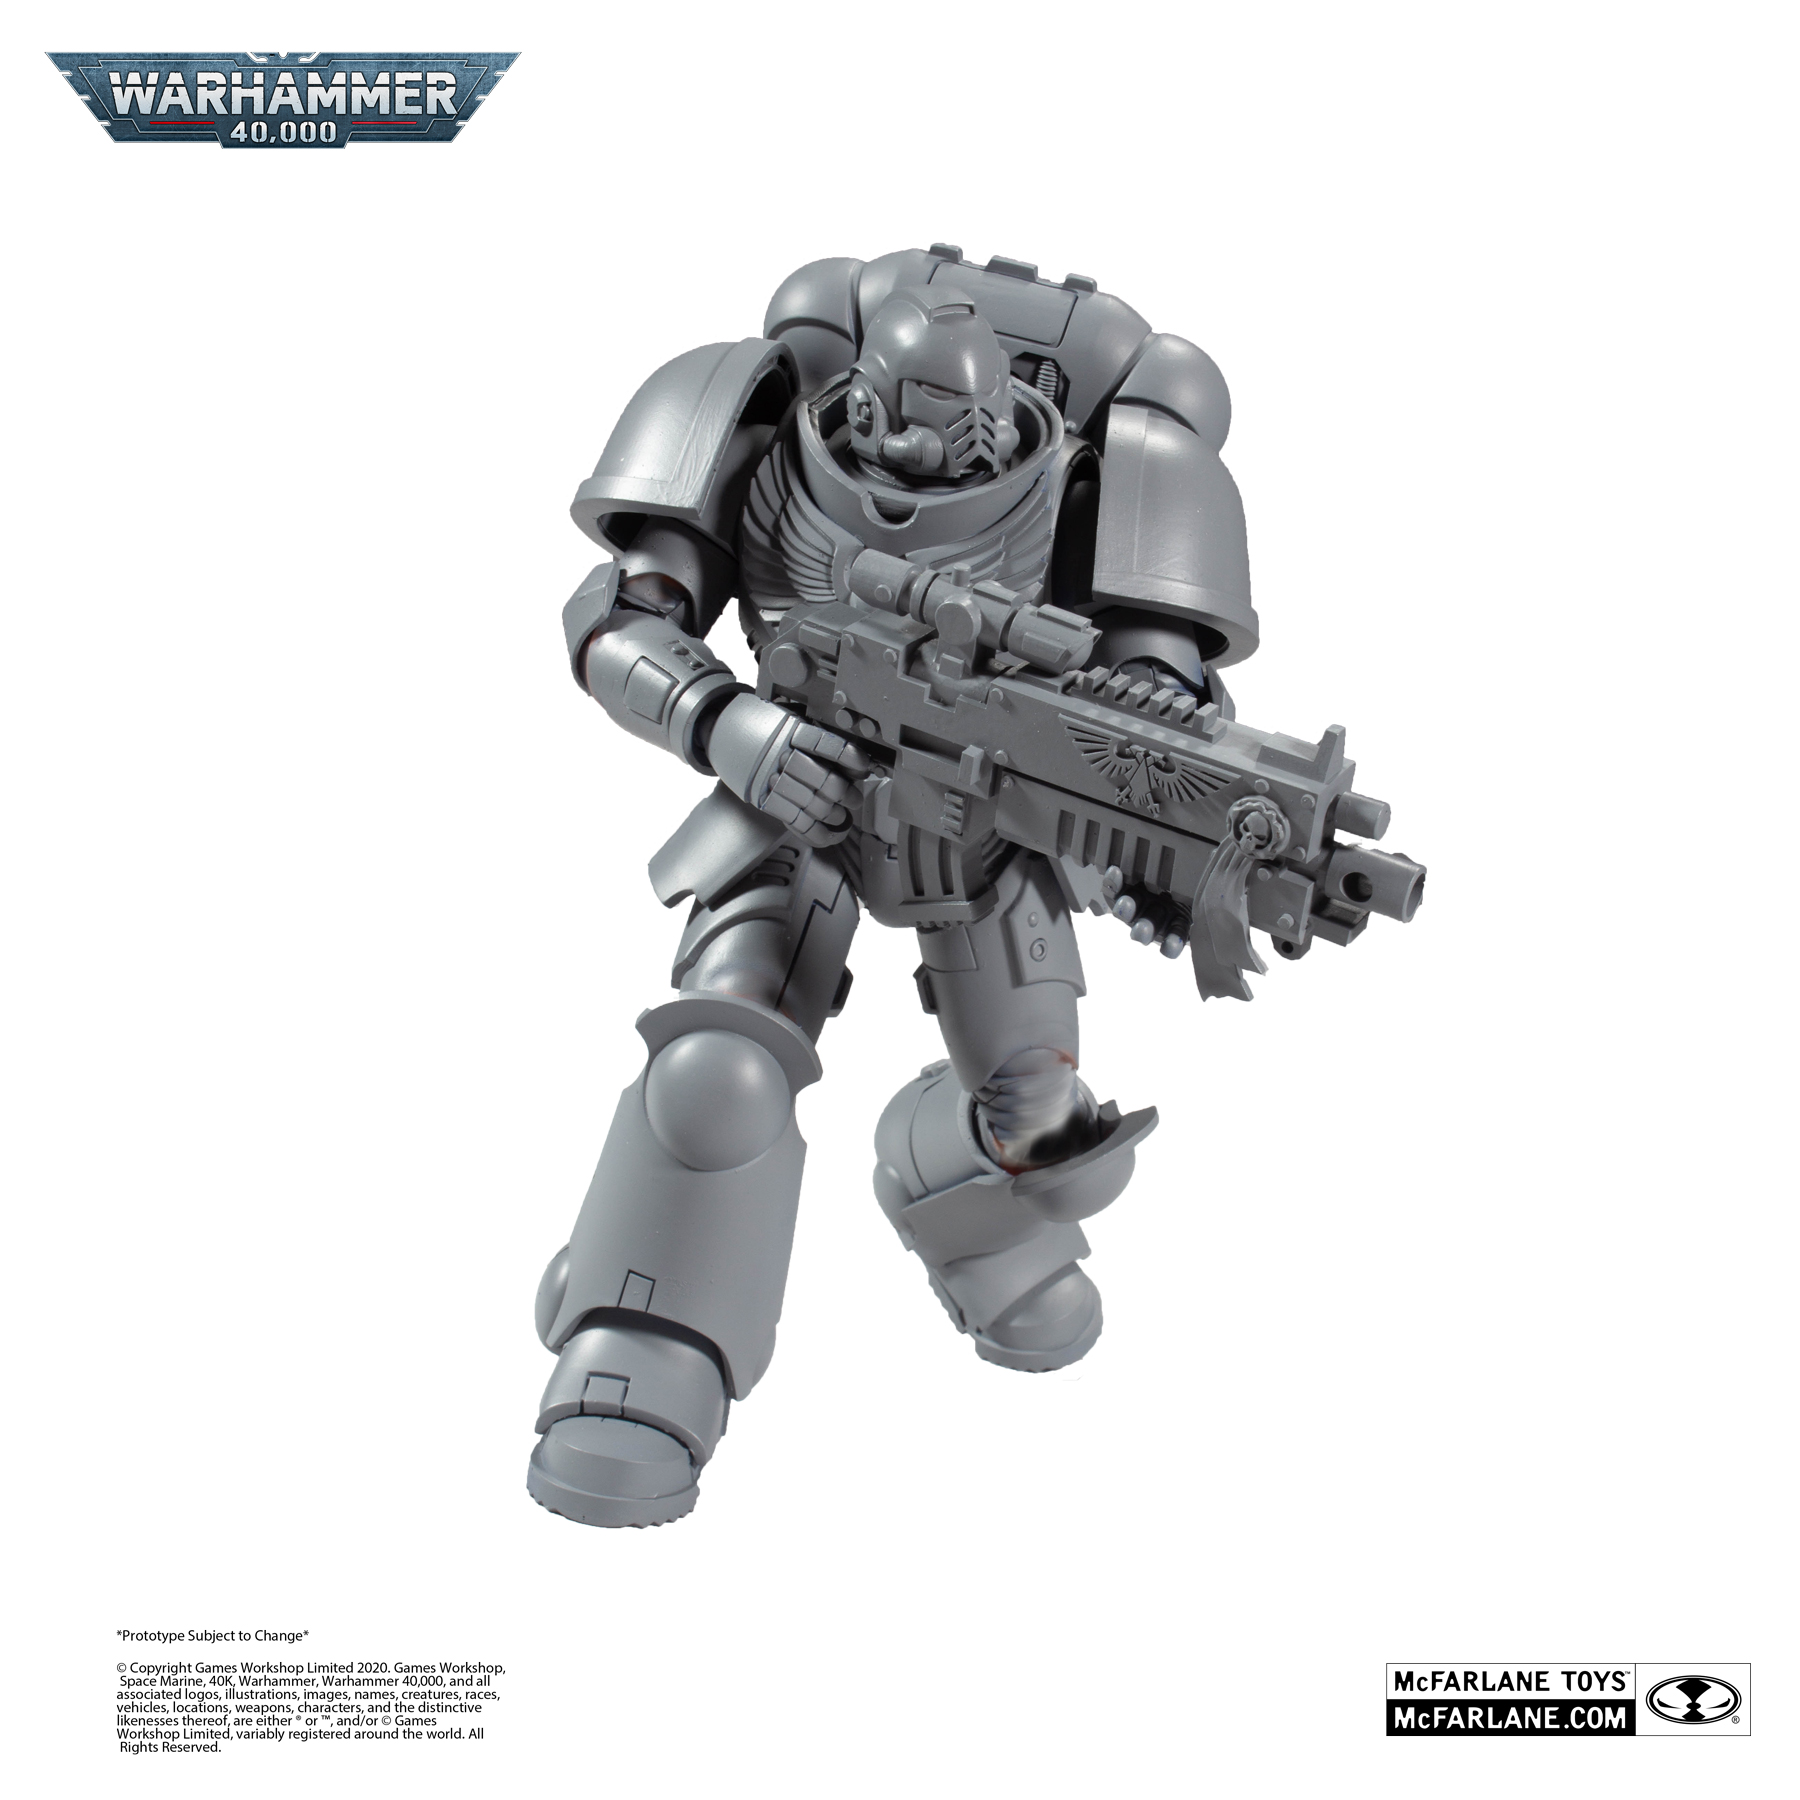 McFarlane Toys Warhammer 40k Space Marine Primaris Action Figure for sale online 